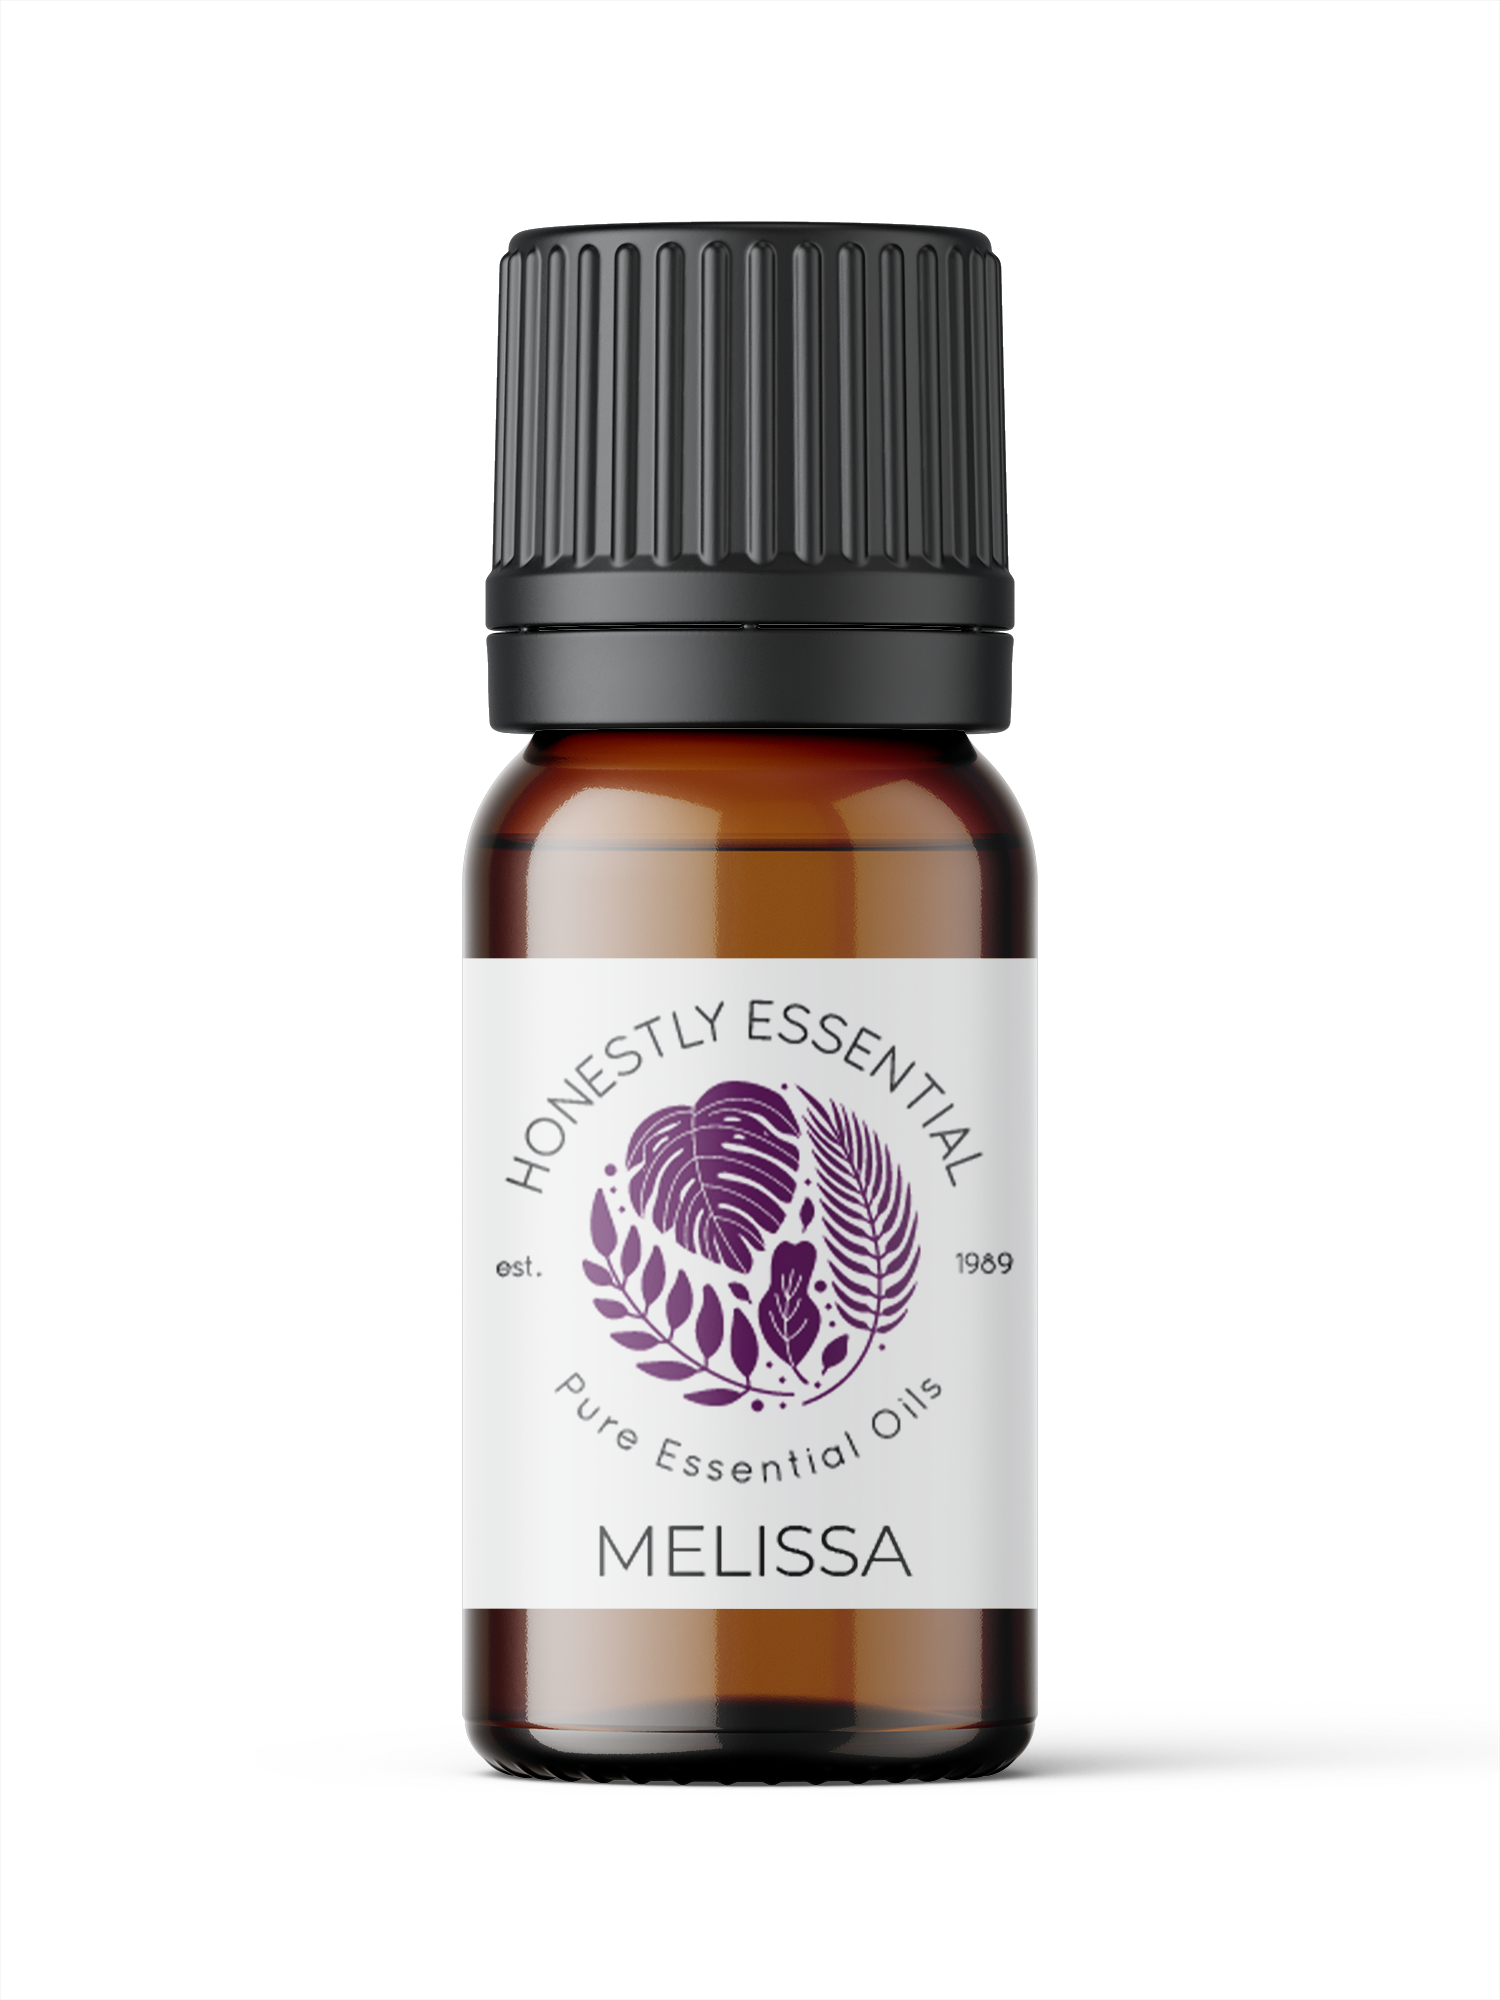 Melissa Essential Oil - Essential Oils | Honestly Essential Oils anxiety, bruising, depression, herb, herb essential oil, herbs, relaxation, relaxation and sleep, sleep, sores, wounds